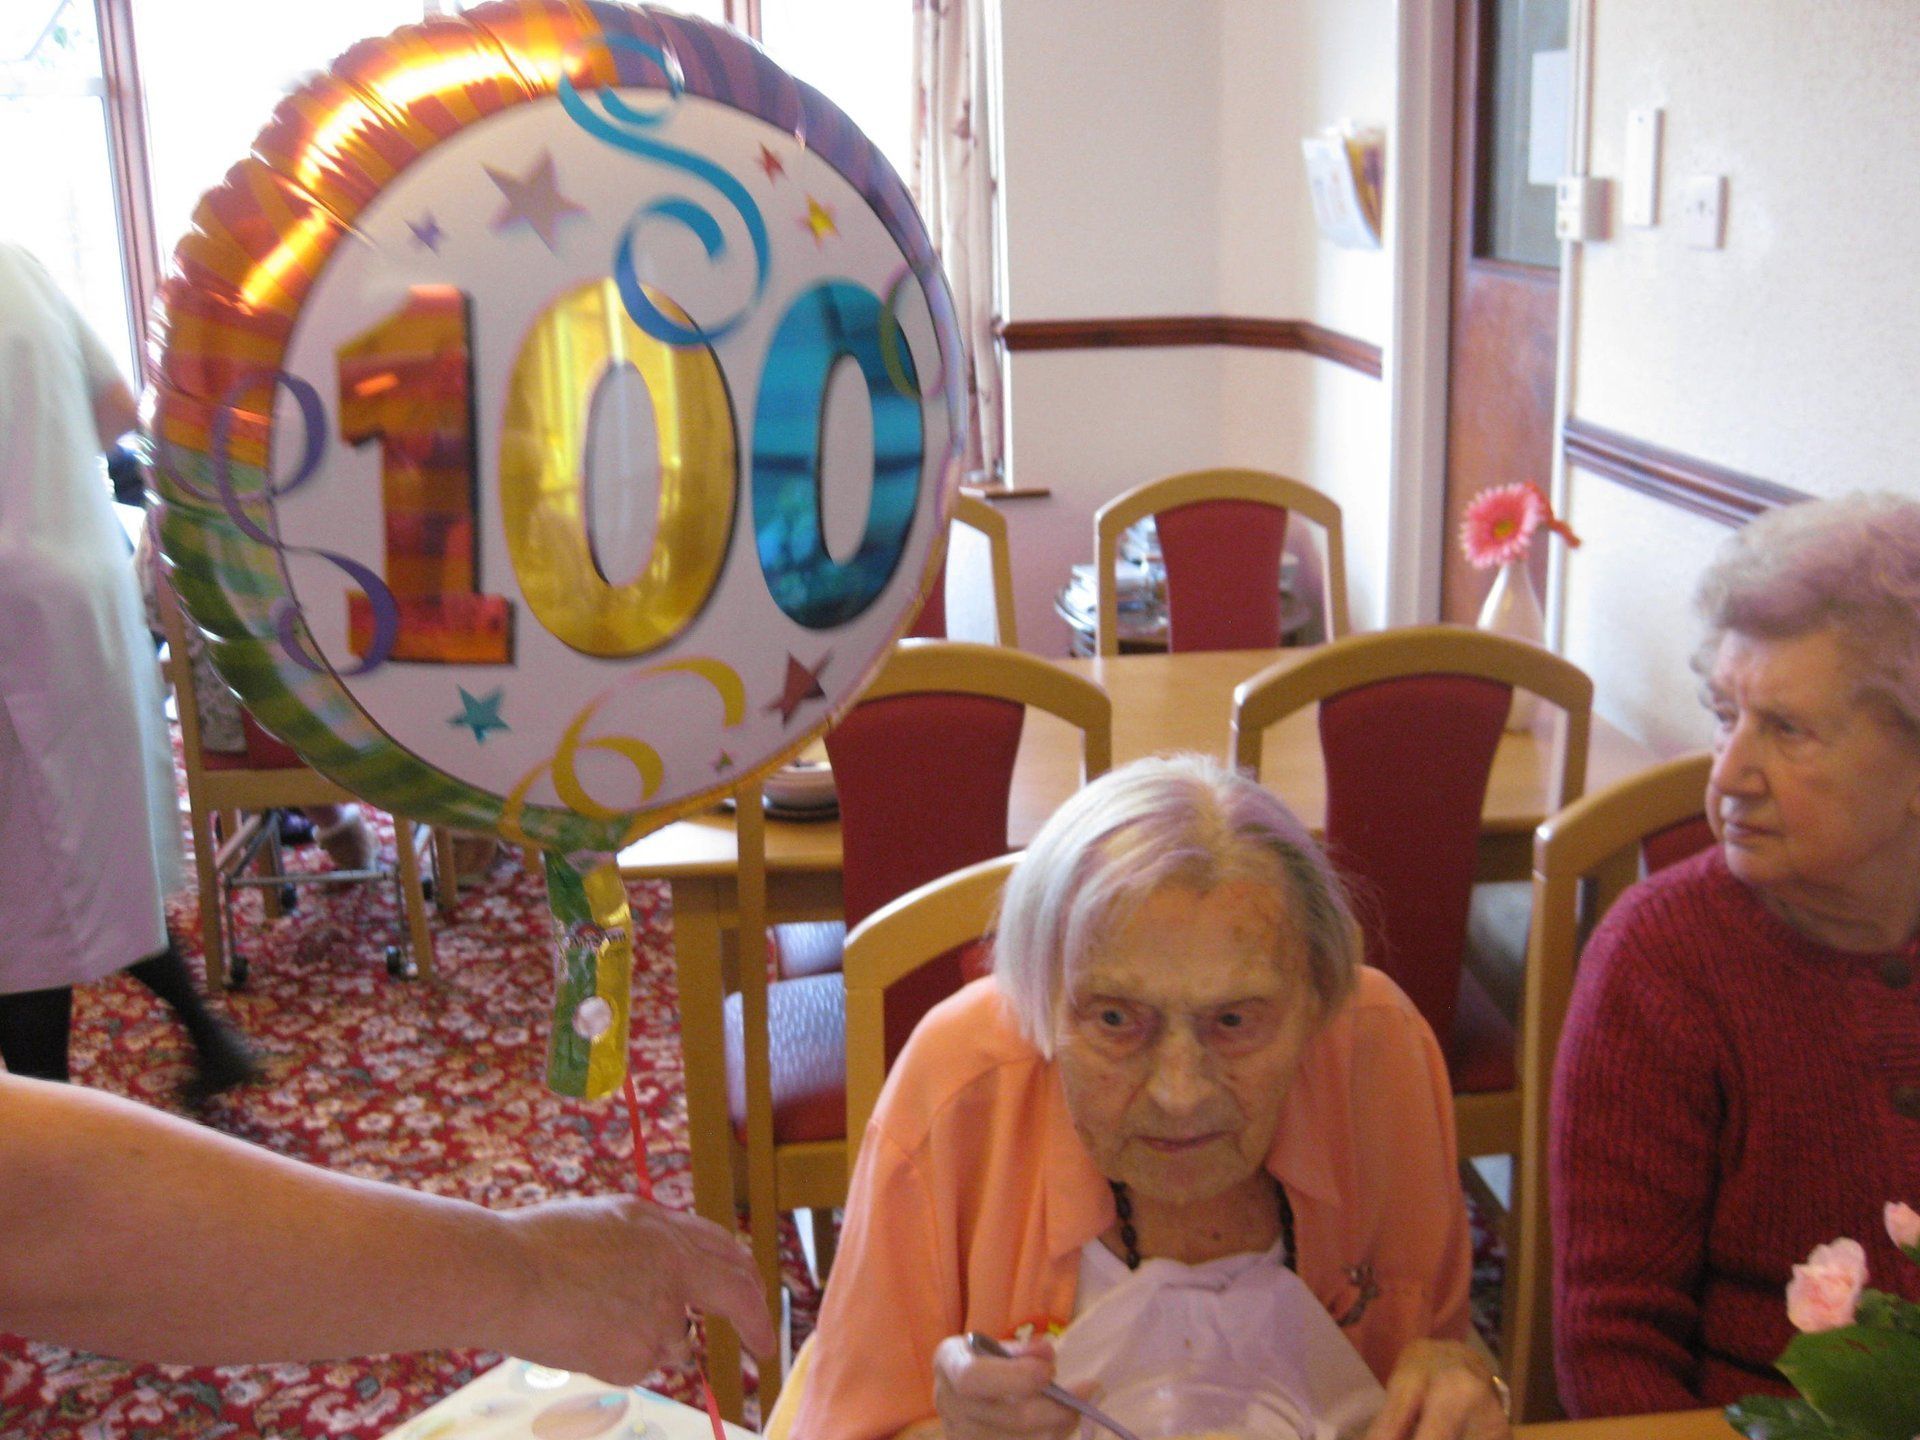 100th birthday celebrations at Avon Park Care Home Southampton